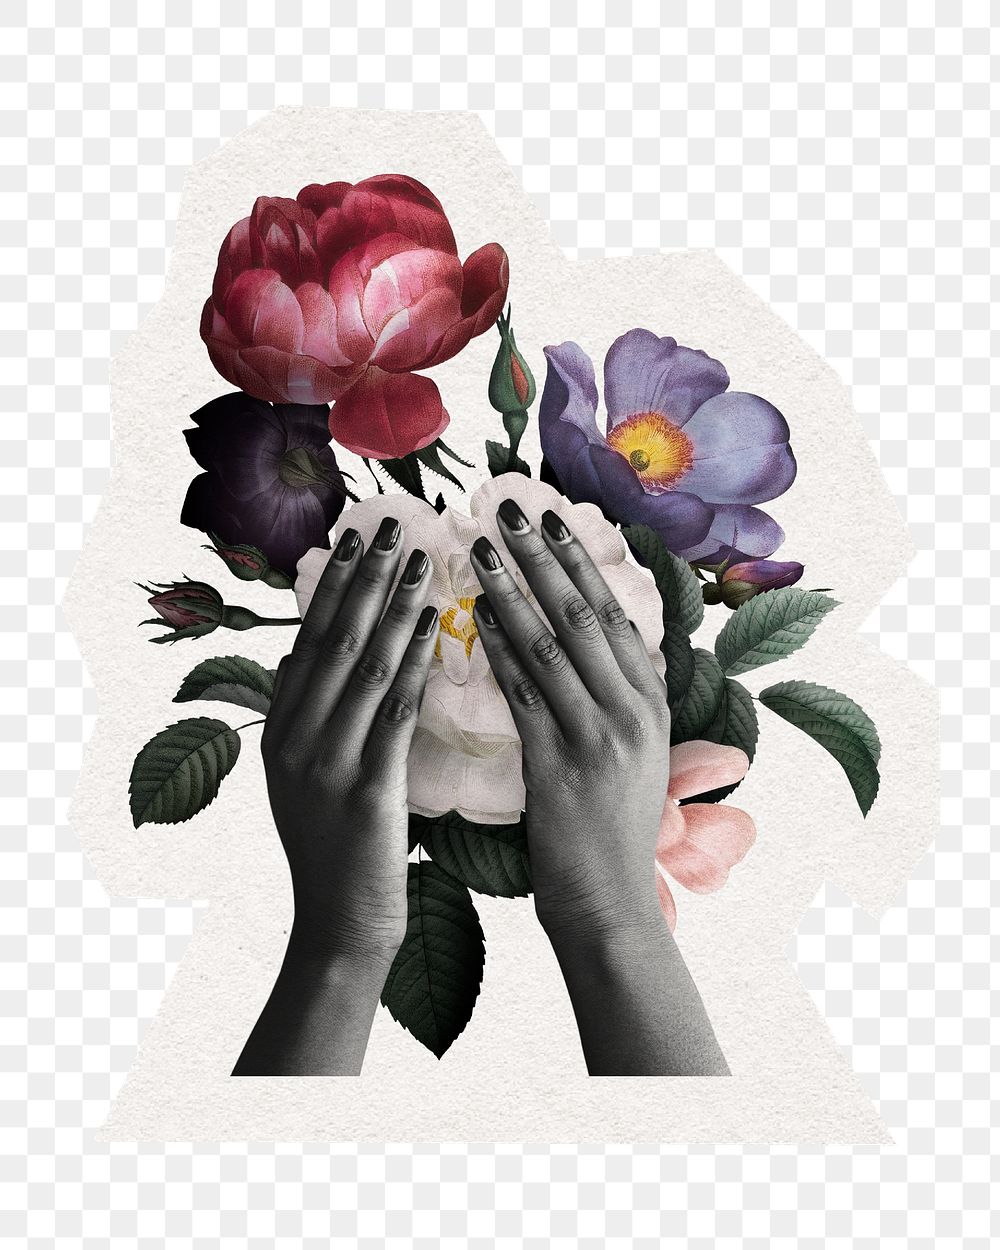 Floral woman png sticker, botanical illustration mixed media, digital collage art in transparent background